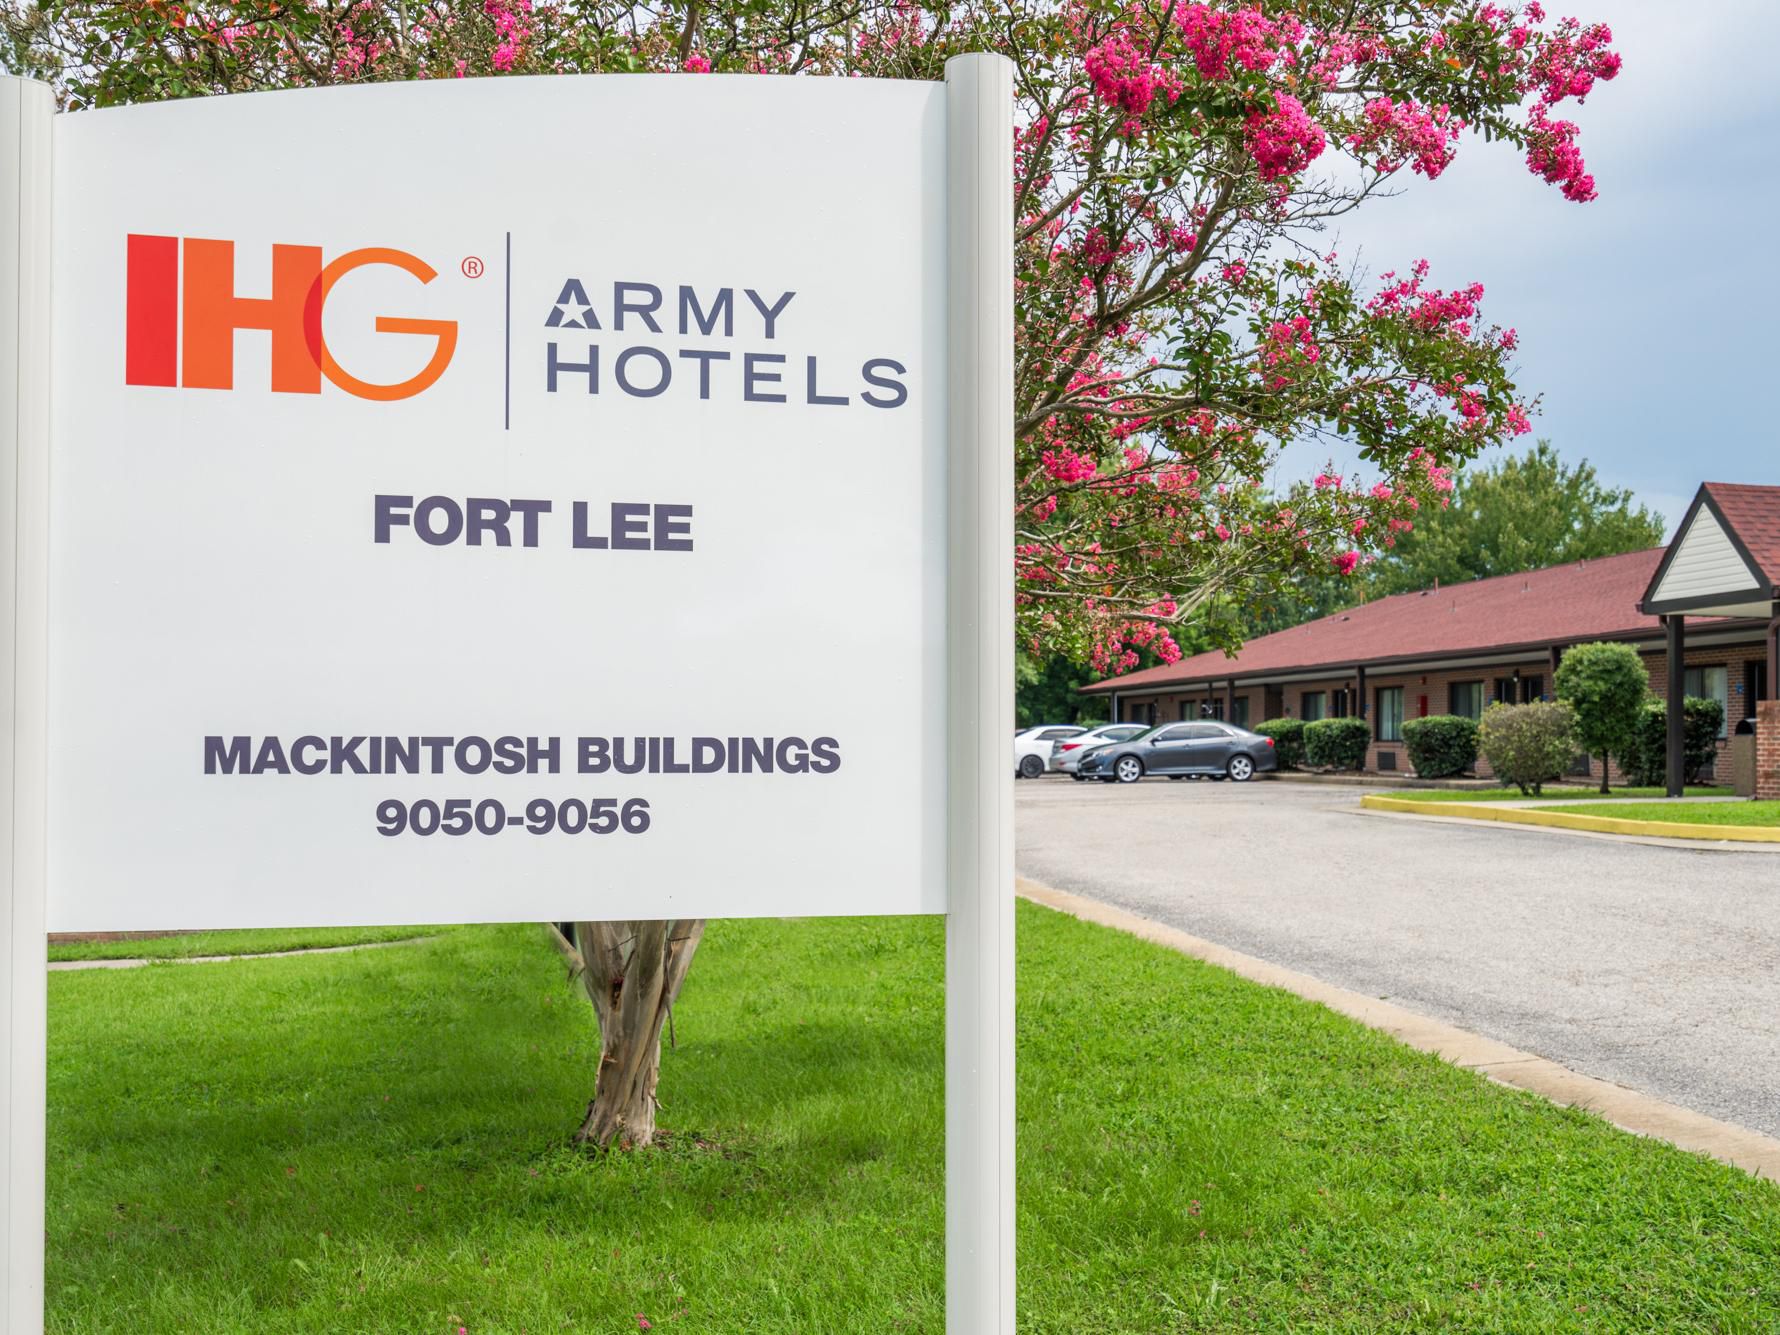 IHG Army Hotels Mackintosh Buildings on Fort Lee